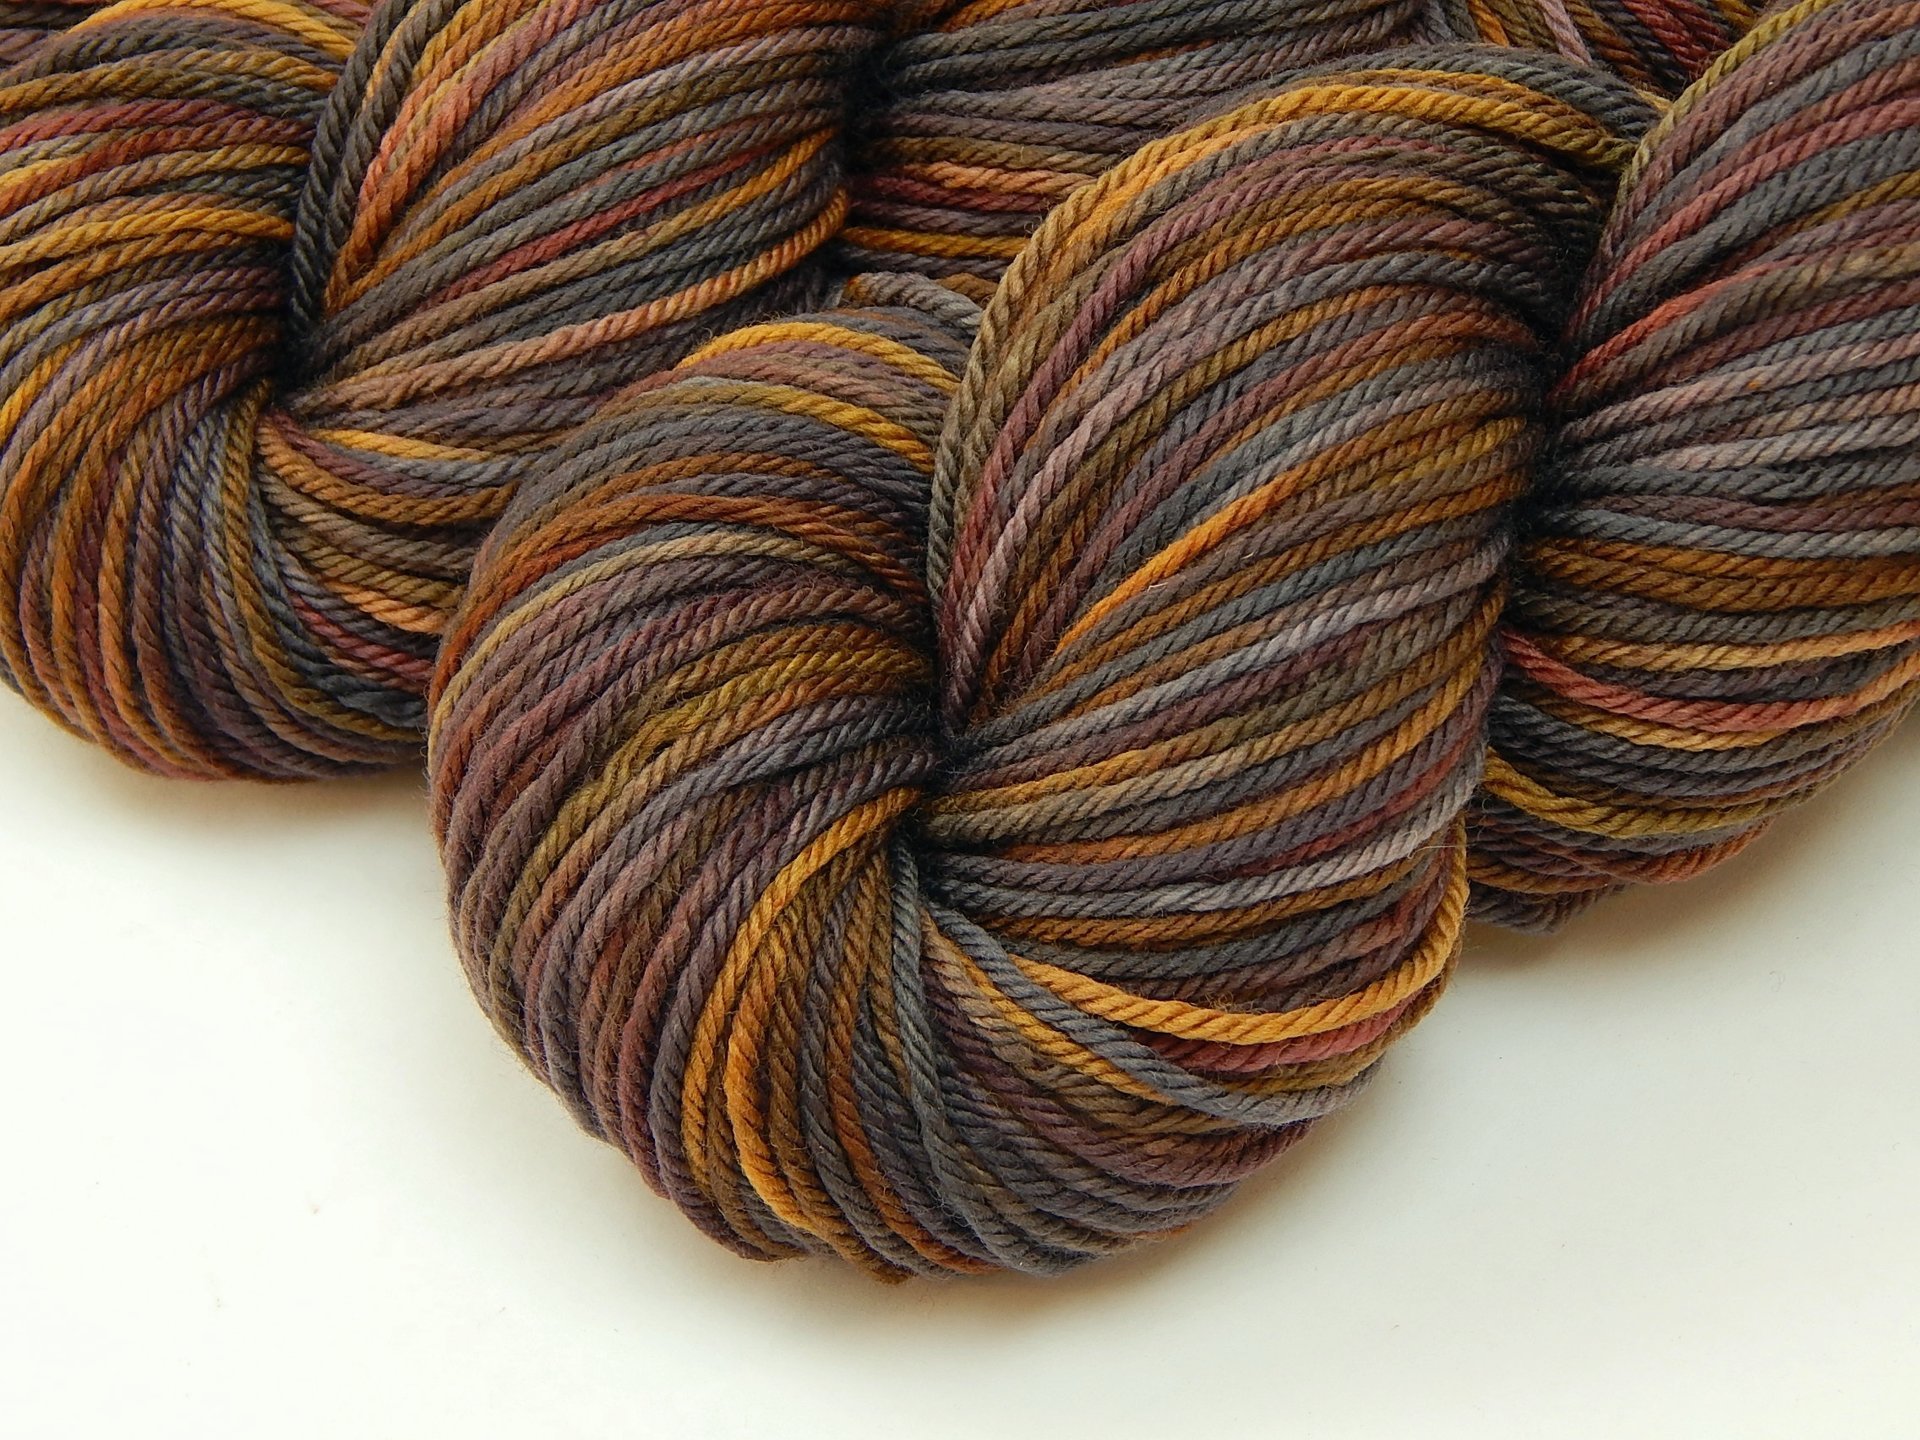 Hand Dyed Worsted Weight Yarn, Superwash Merino Wool - Agate - Earthtones Hand Dyed Yarn, Indie Dyer Knitting Yarn Skein, Grey Brown Gold